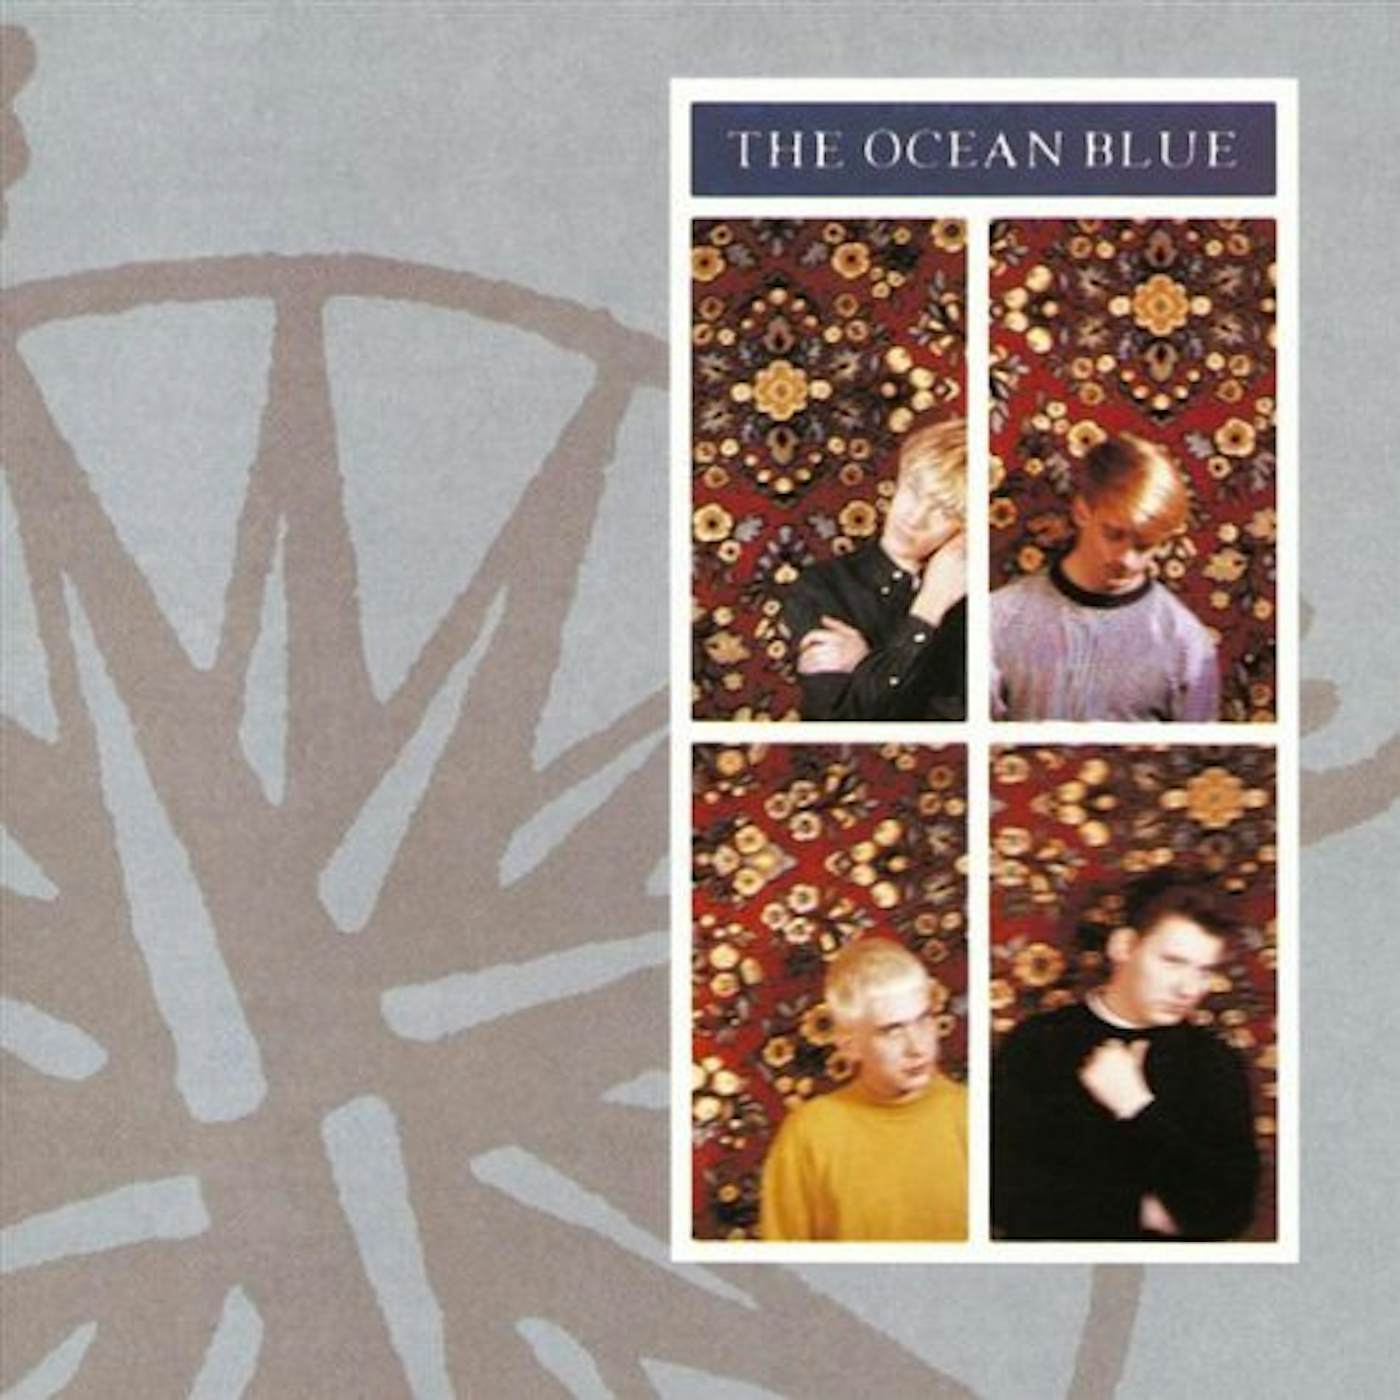 The Ocean Blue CD